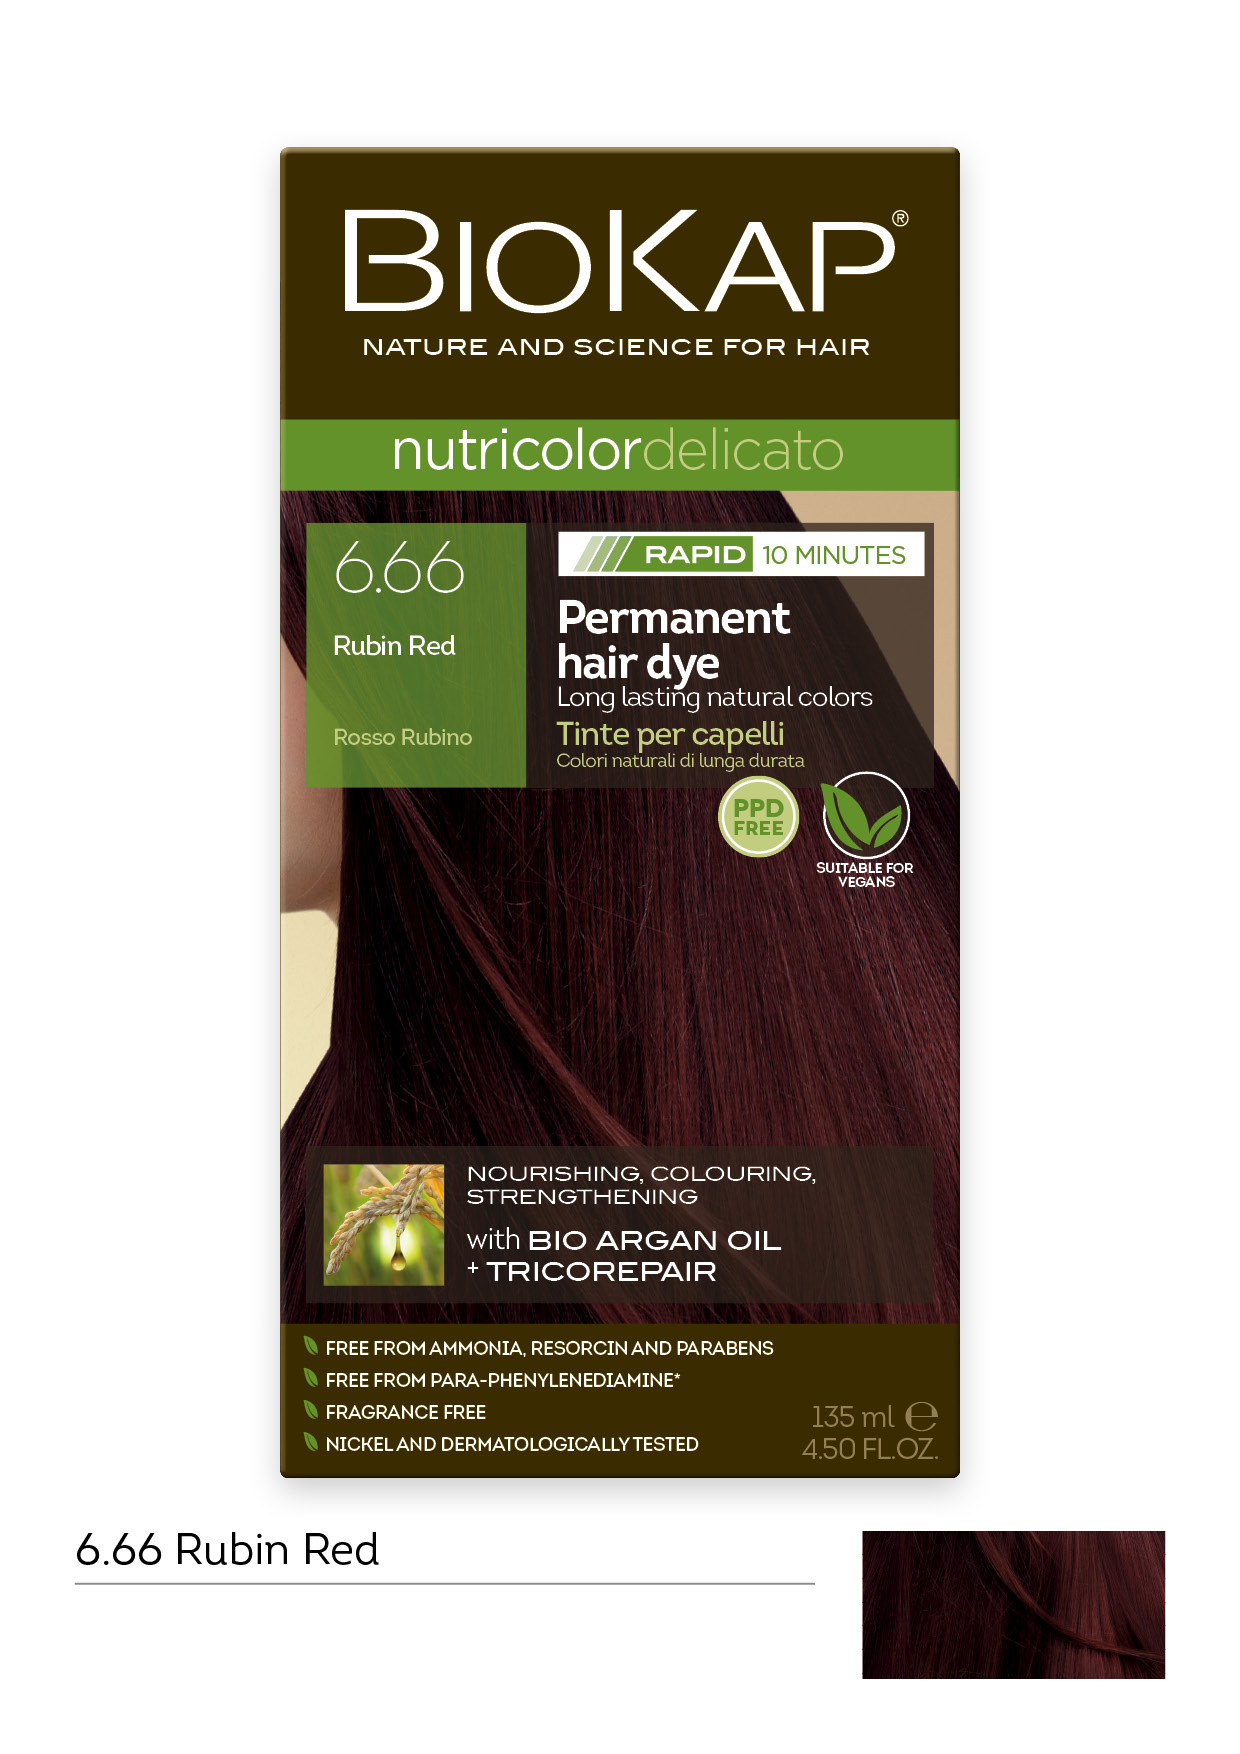 BioKap Nutricolor Delicato Rapid Hair Dye - Rubin Red 6.66